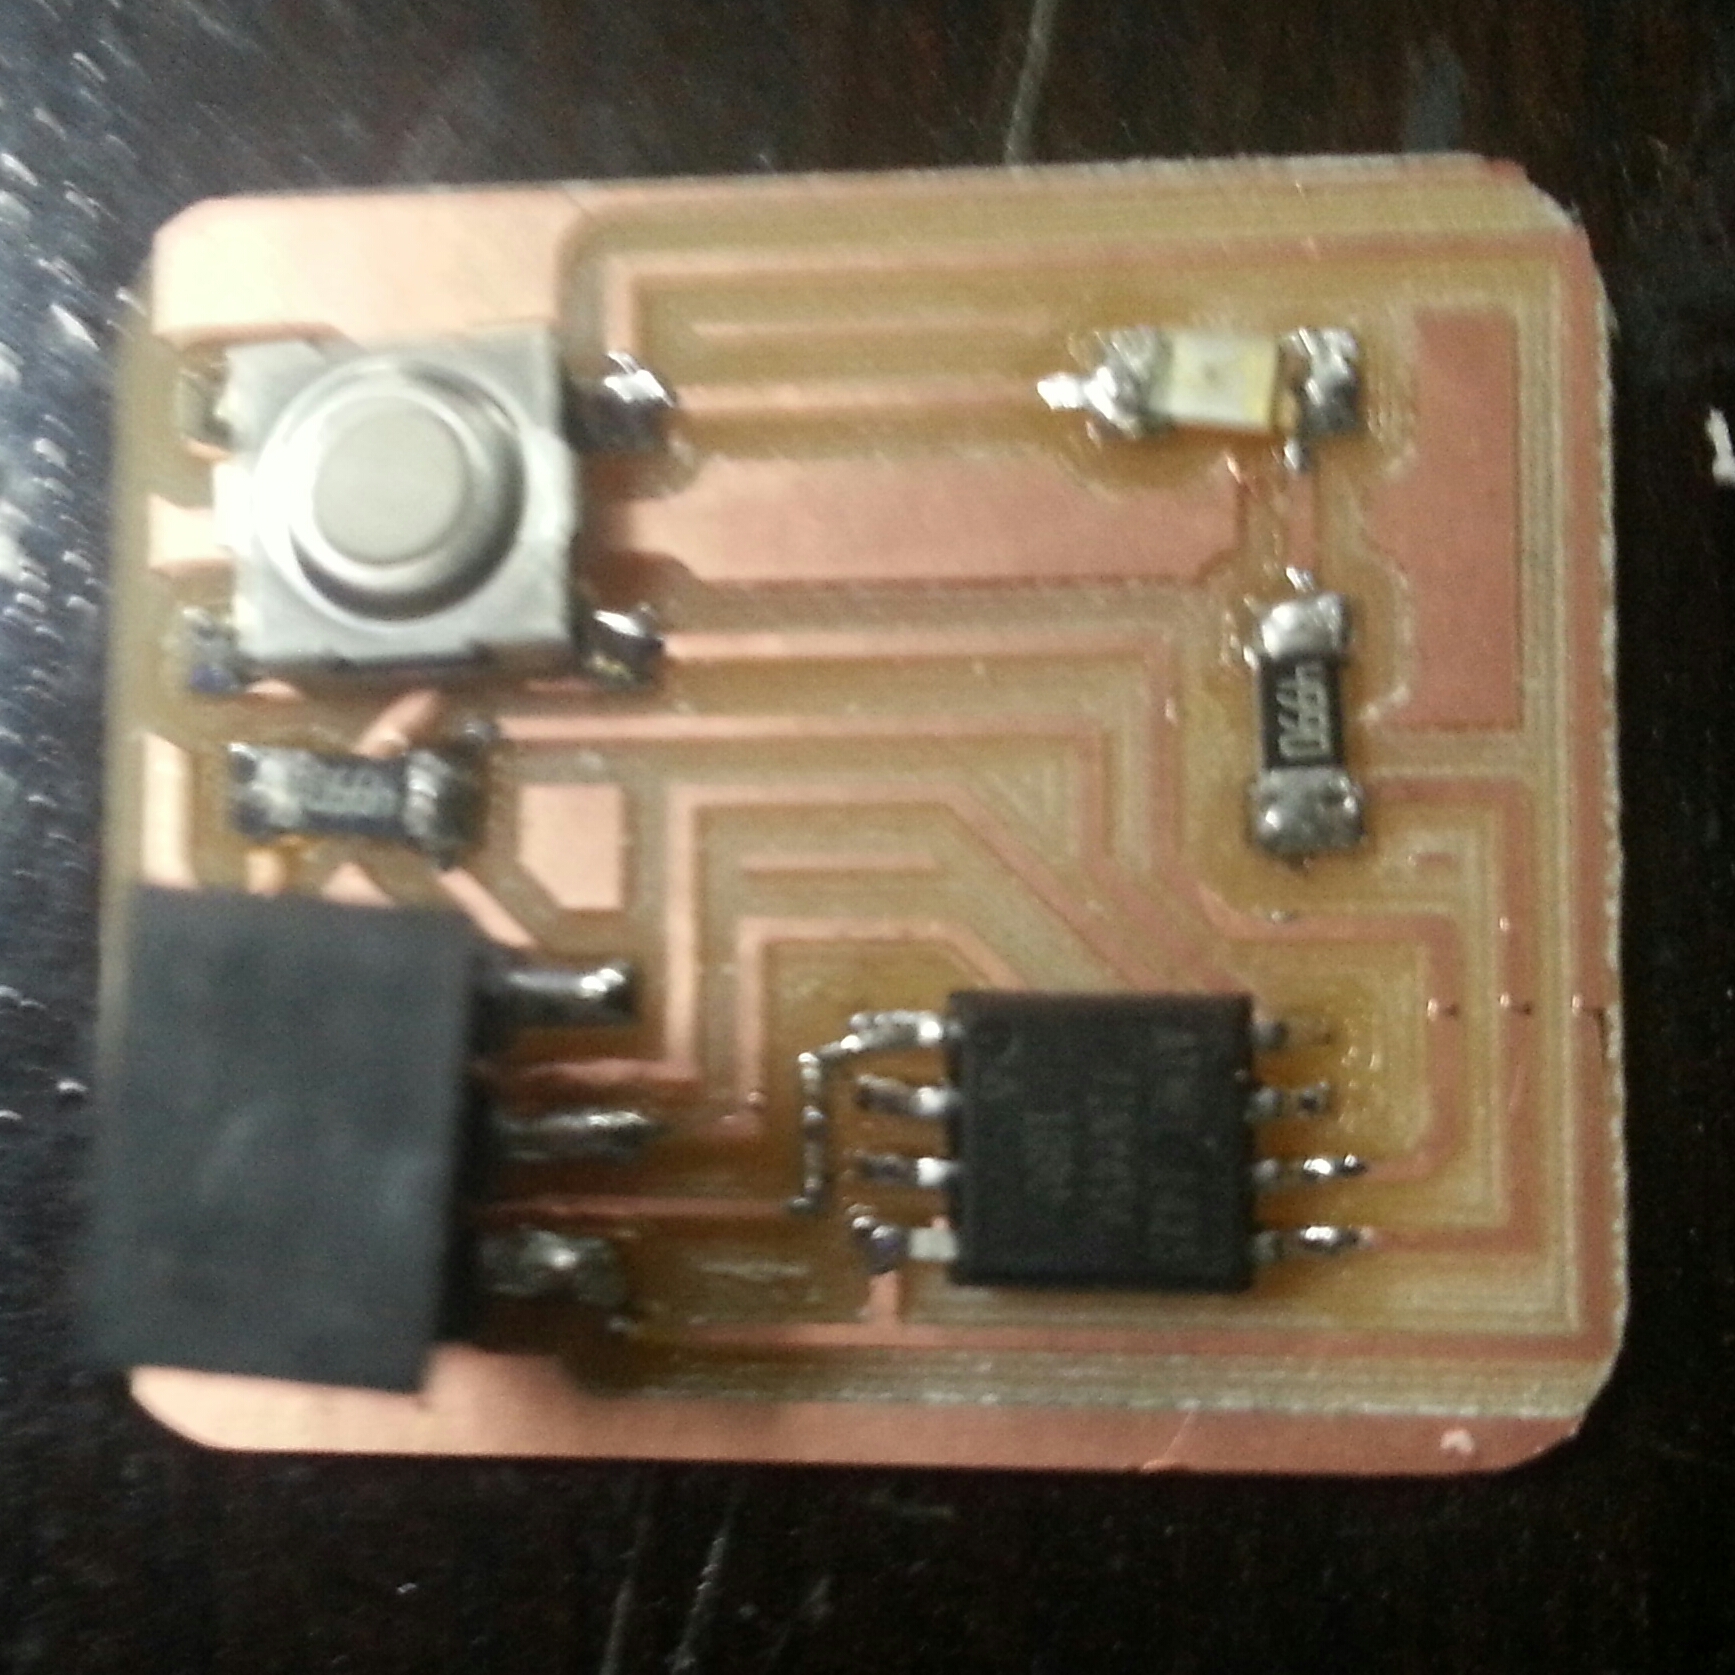 Img: soldered board